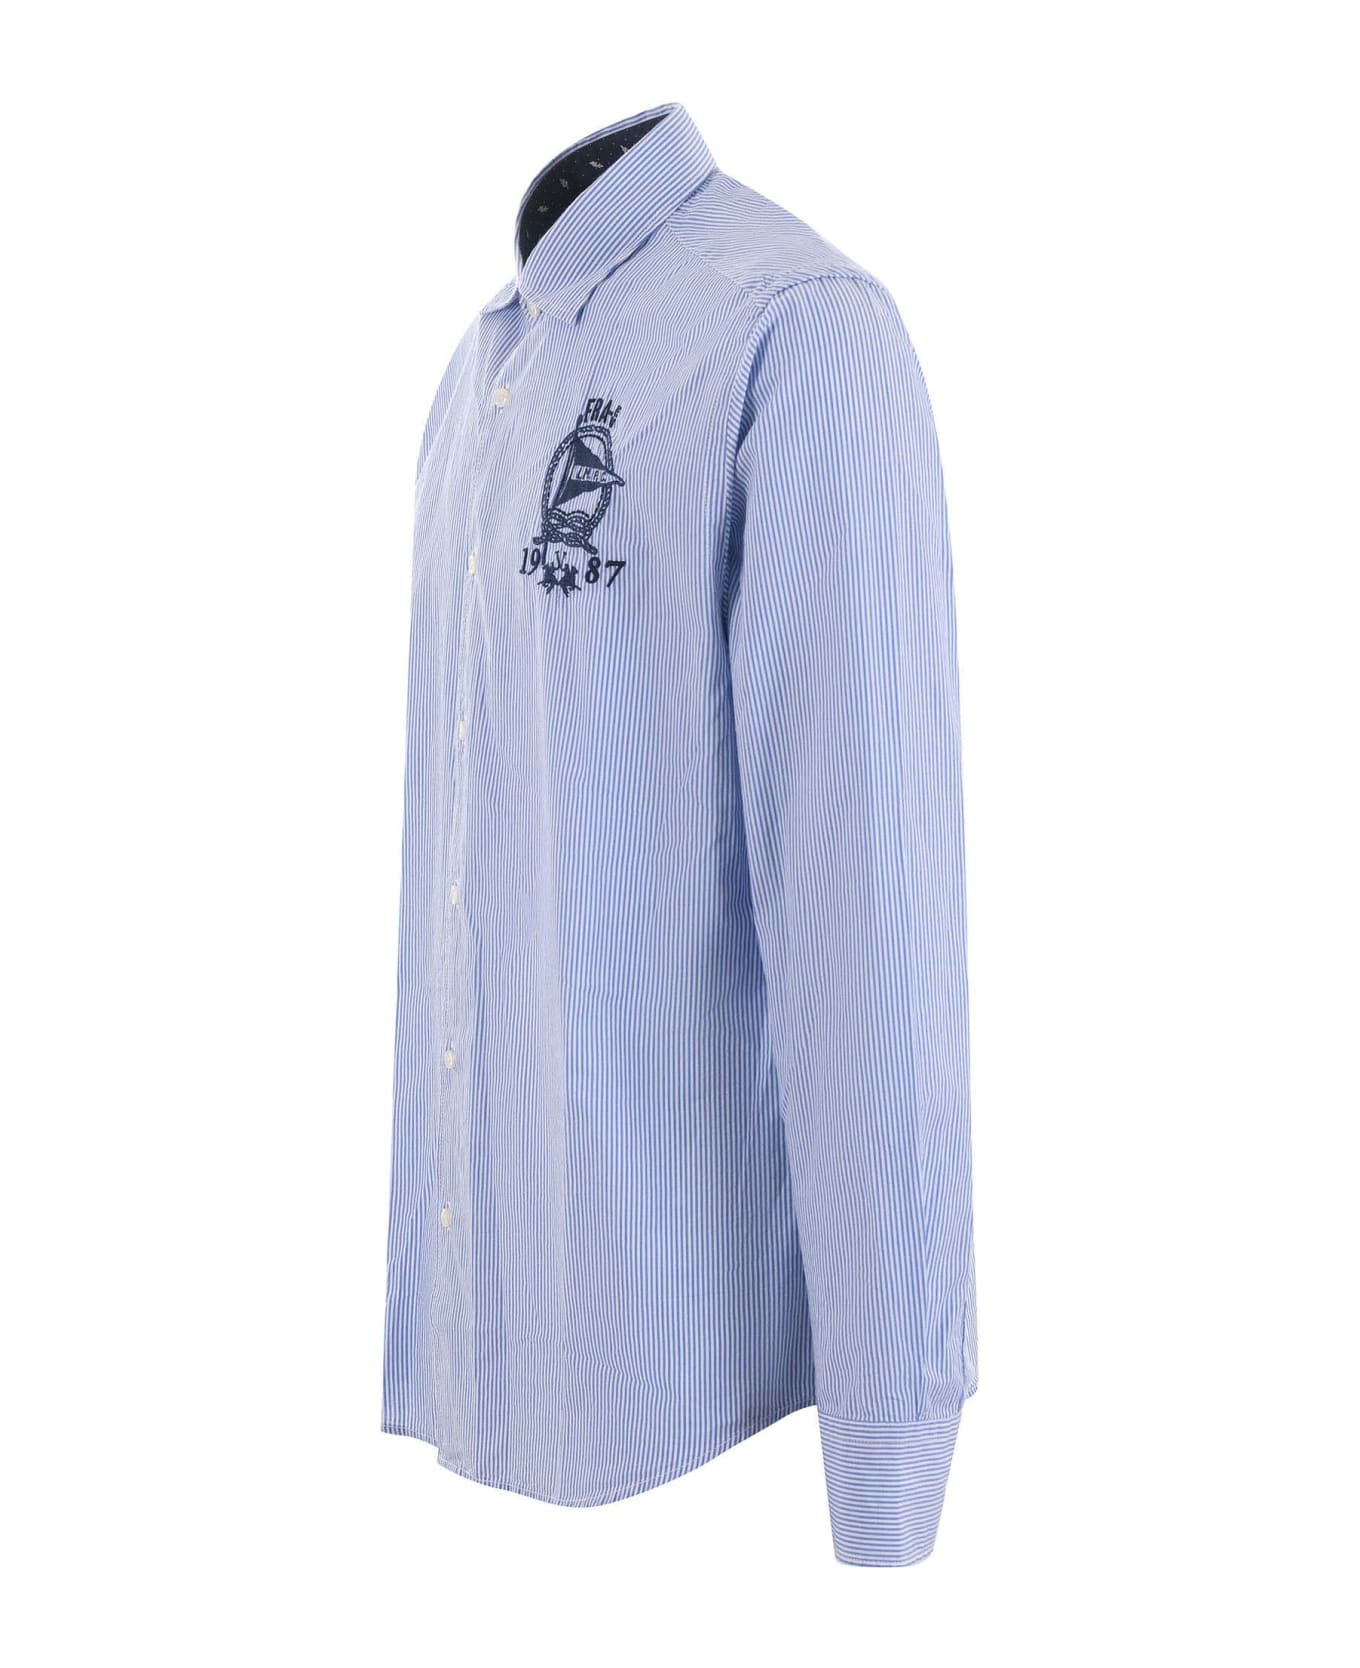 La Martina Shirt - Azzurro/Bianco